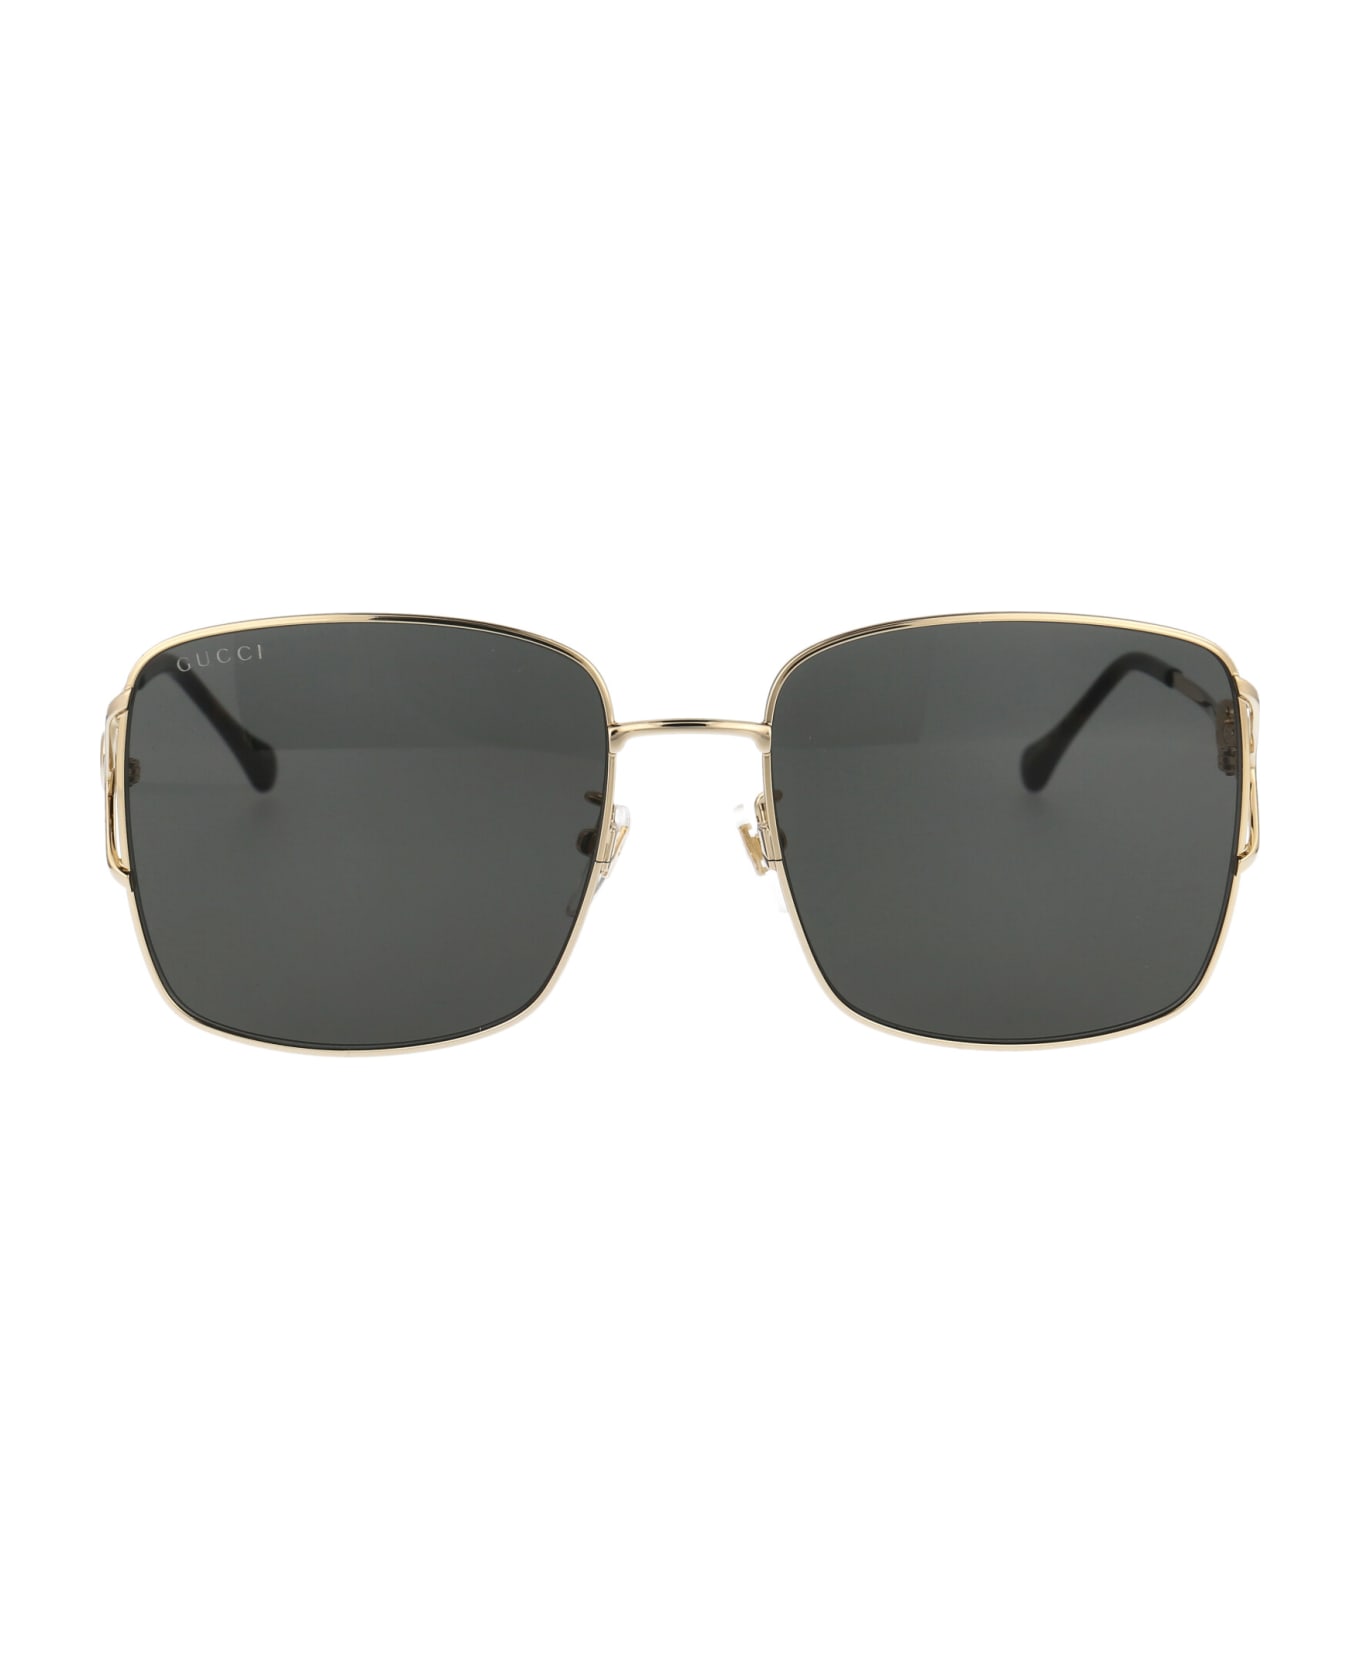 Gucci Eyewear Gg1018sk Sunglasses - 001 GOLD GOLD GREY